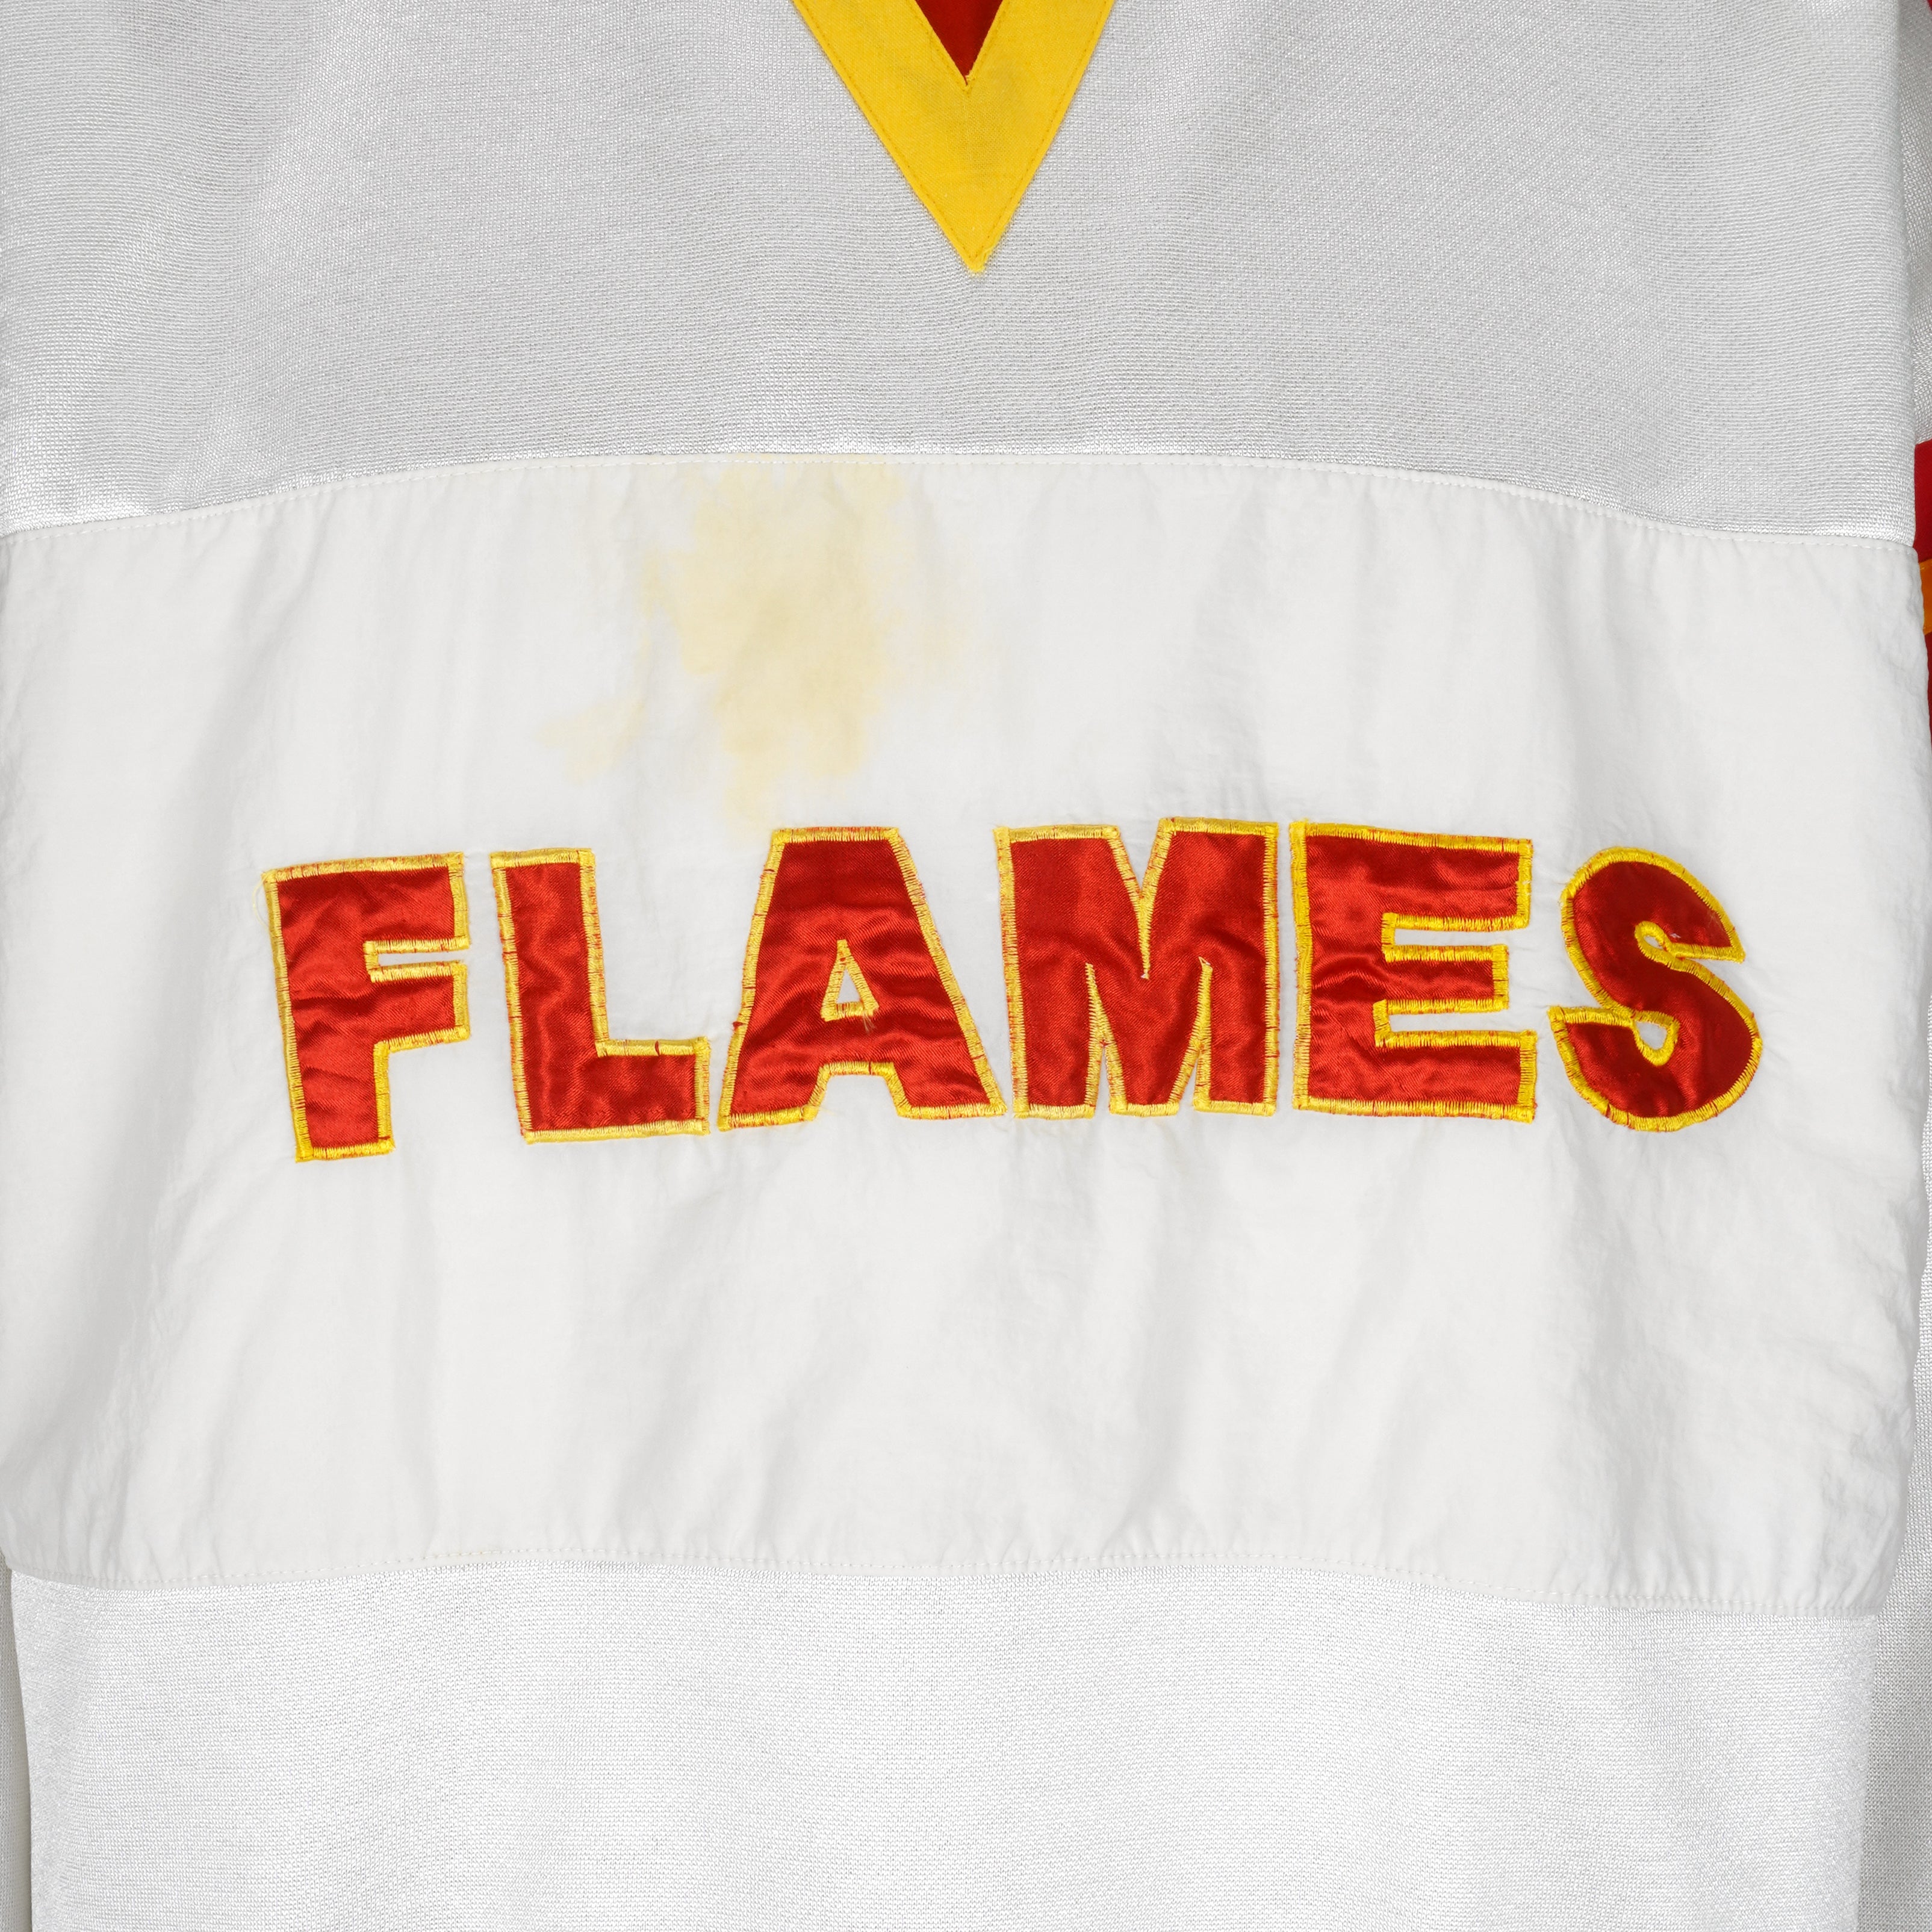 Calgary Flames Crewneck Sweatshirt, Hockey Apparel, Hockey Gear